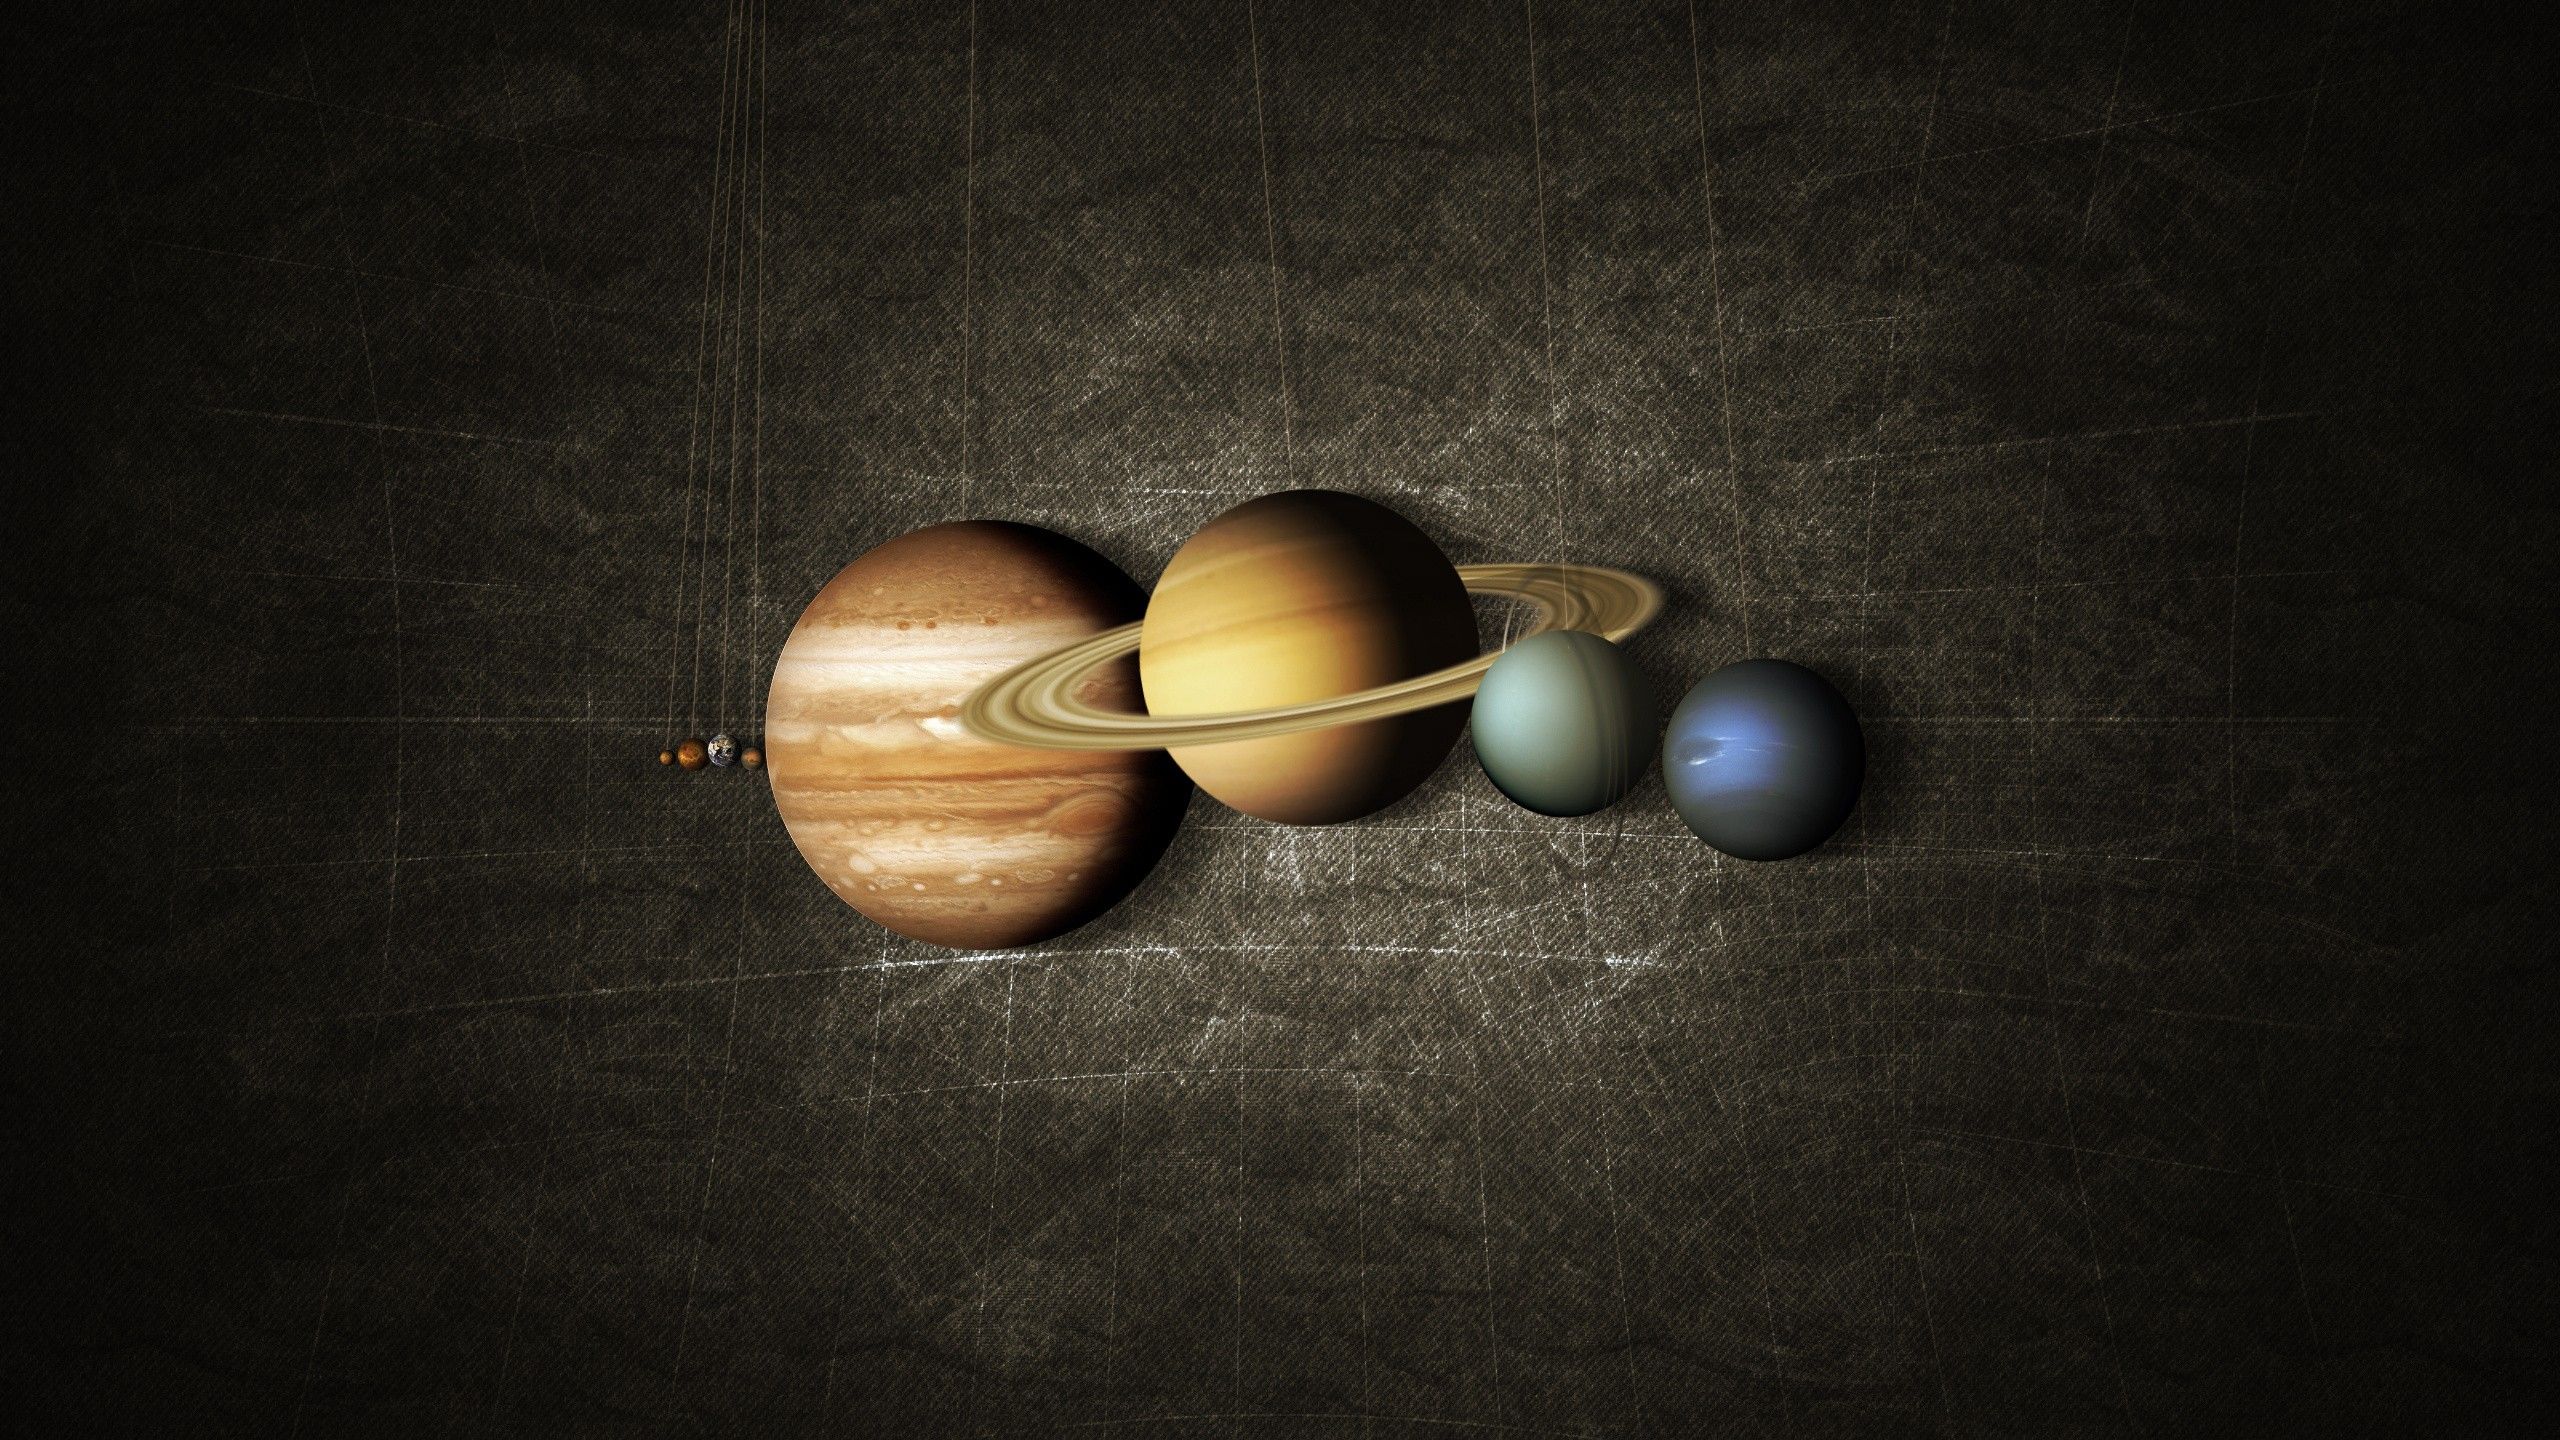 Space Universe Planet Mercury Venus Earth Mars Jupiter Saturn Uranus Neptune Digital Art Texture Wallpaper:2560x1440